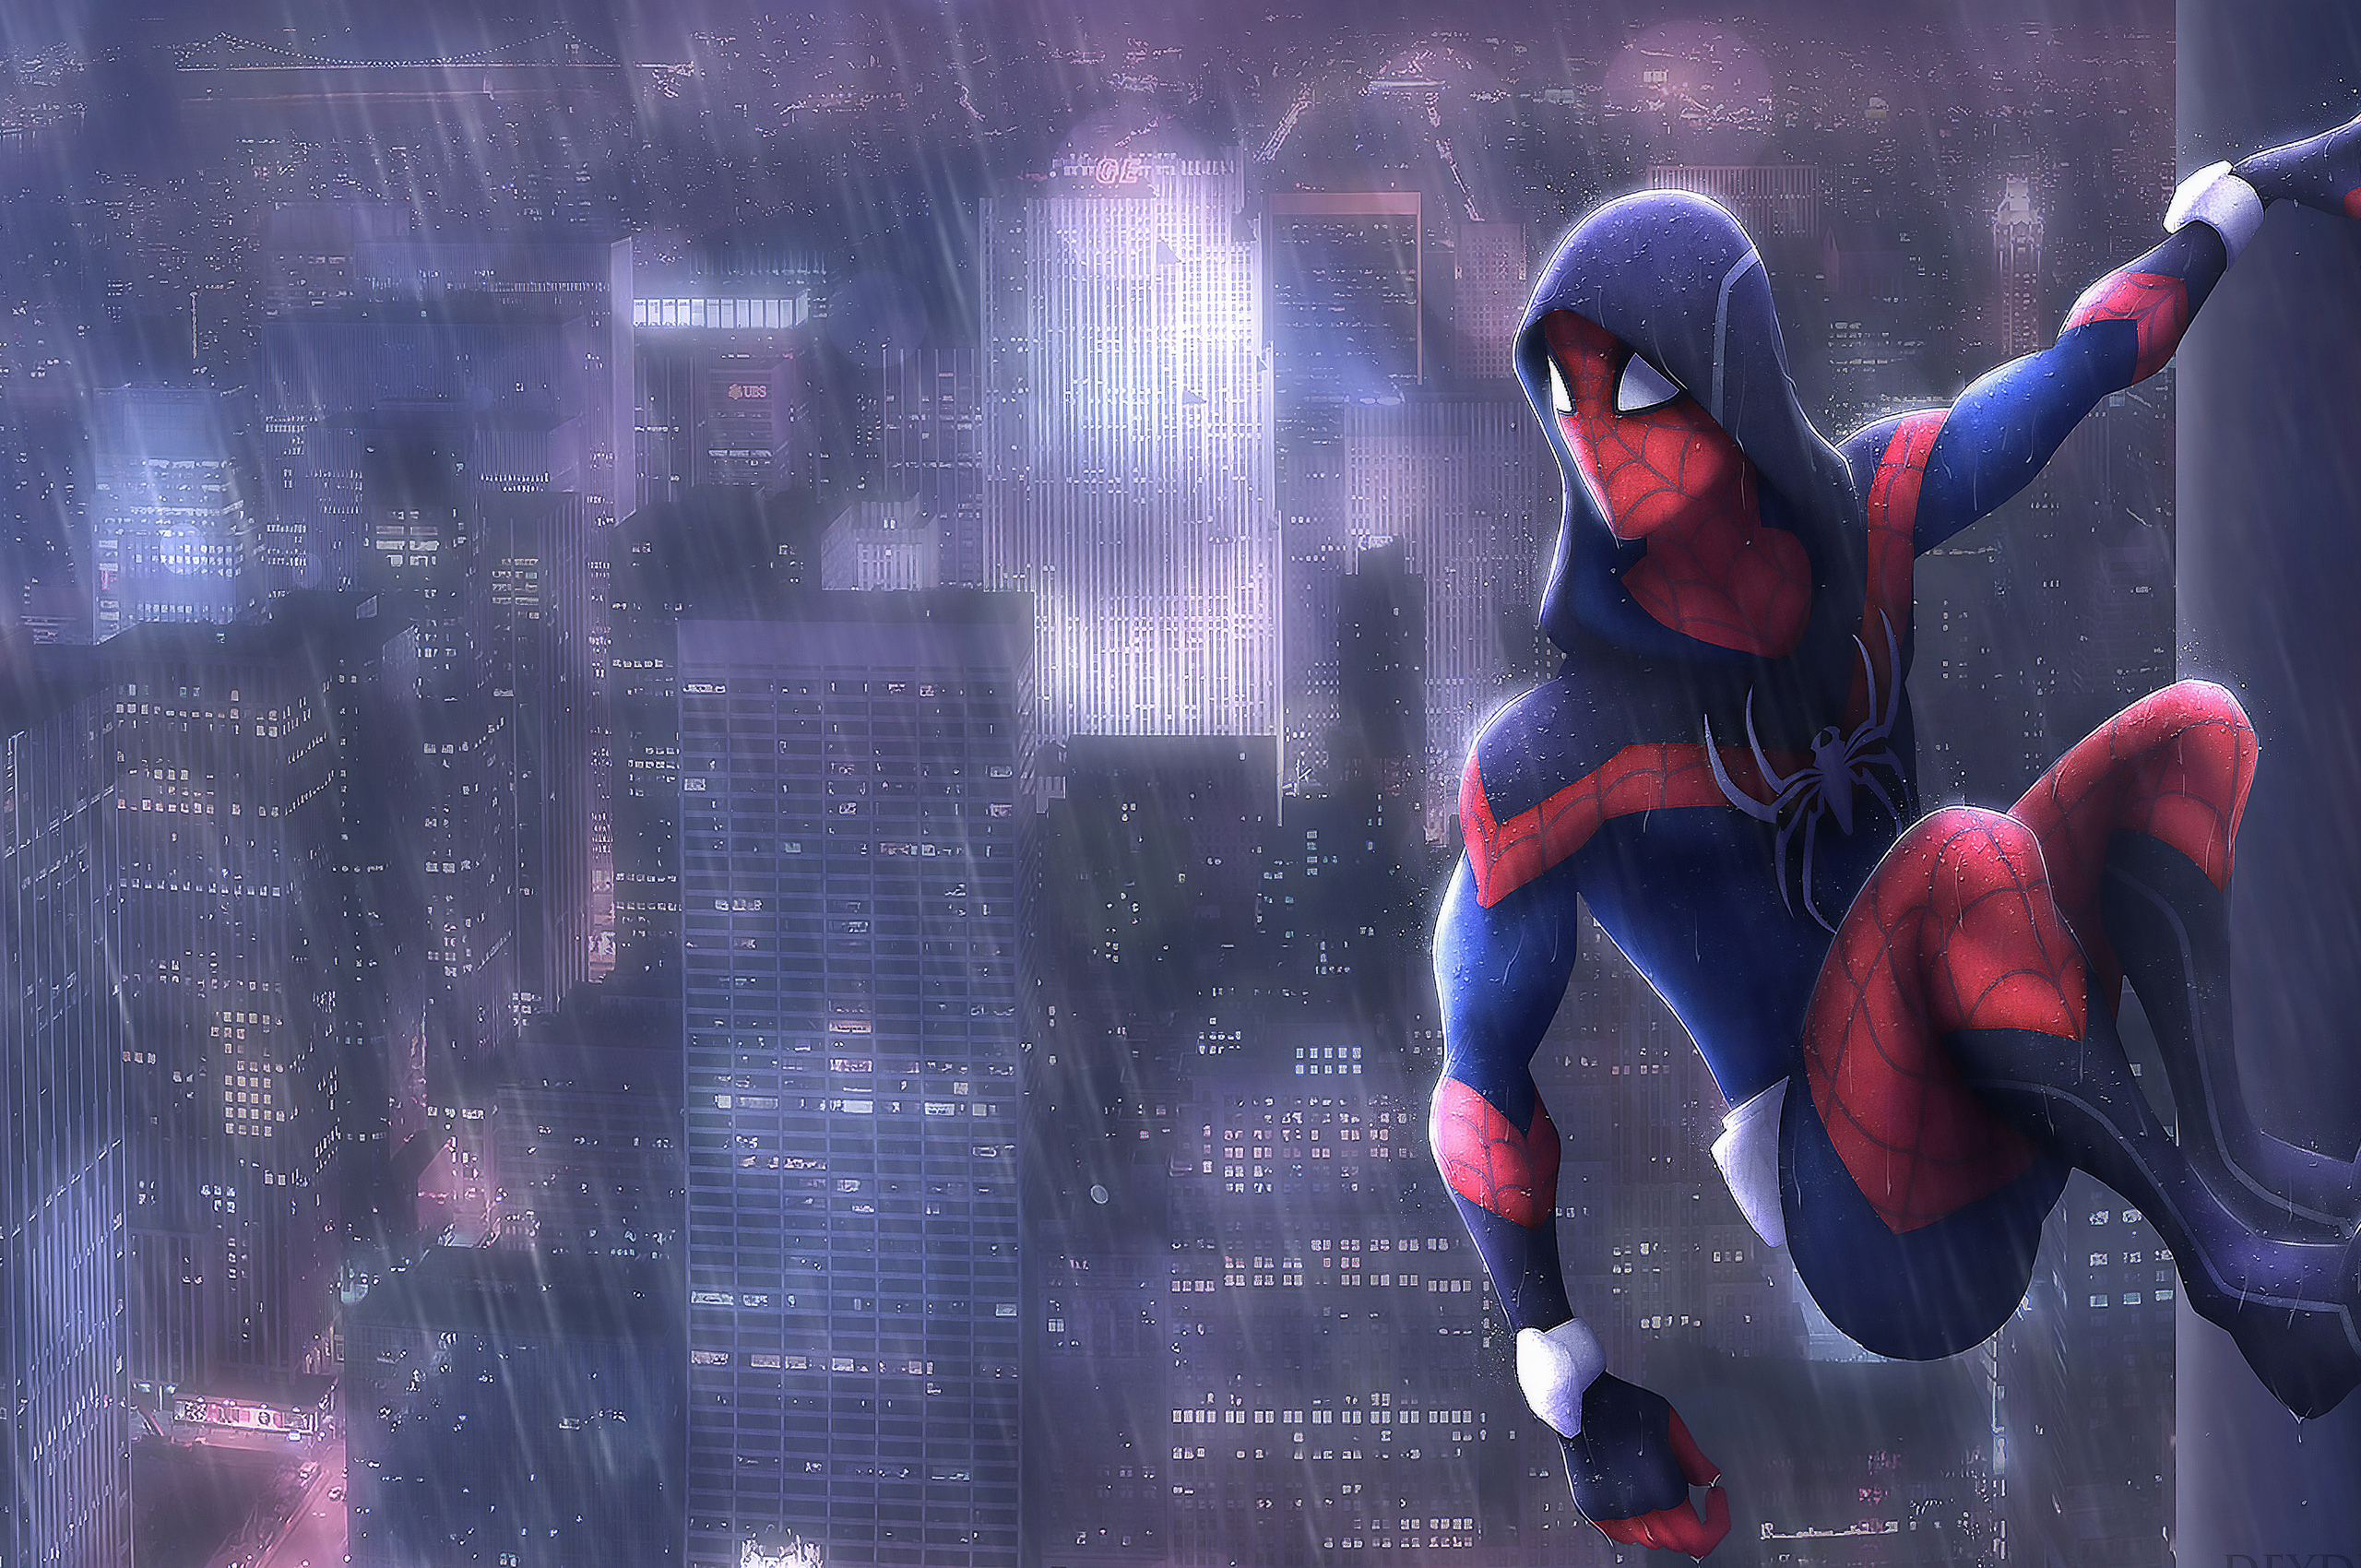 Spiderman In Rain Art In 2560x1700 Resolution. spiderman-in-rain-art-o5.jpg...